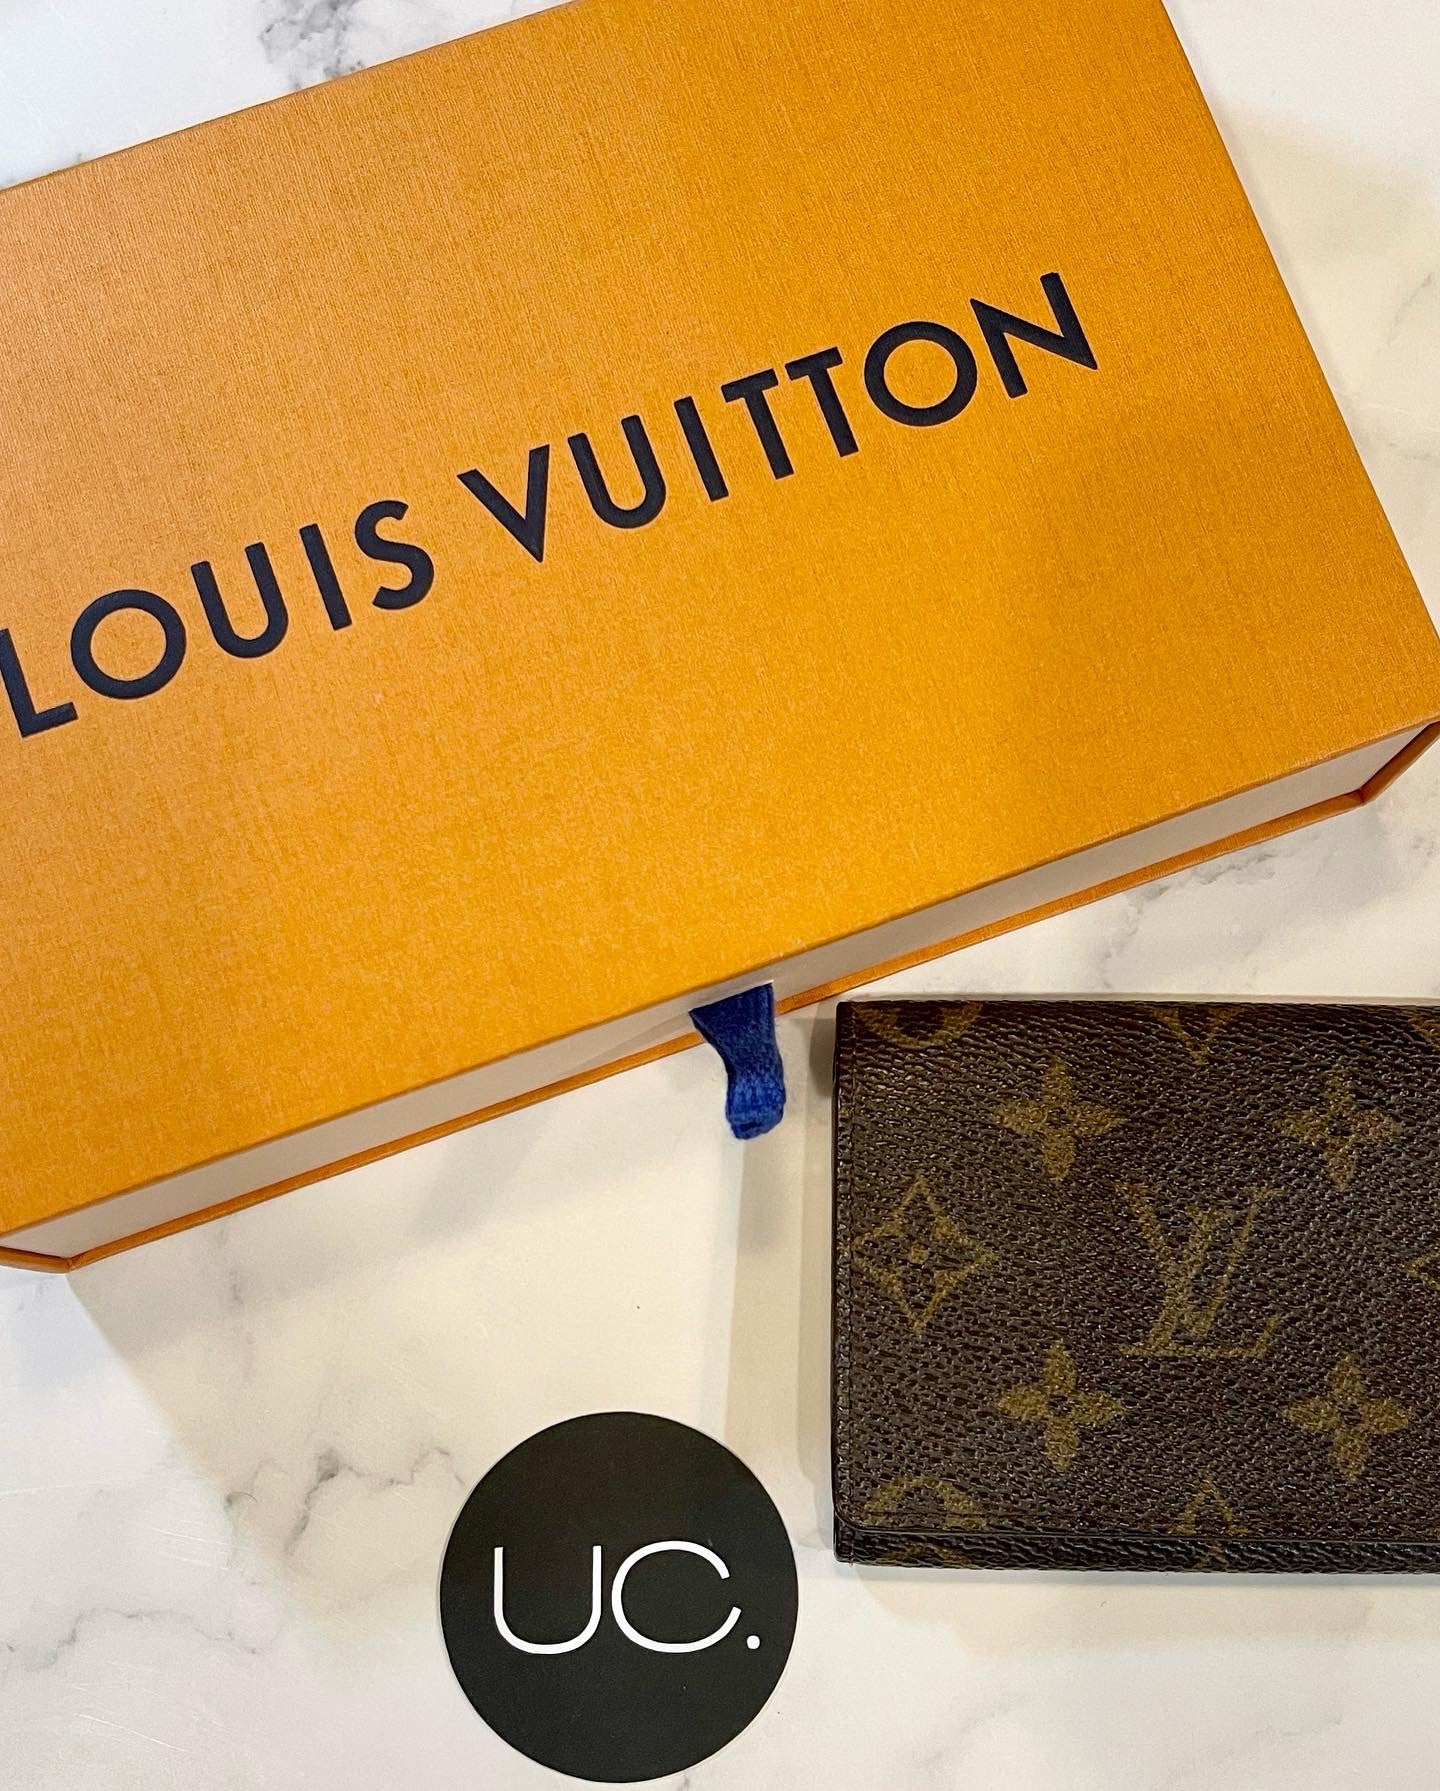 Louis Vuitton Monogram Canvas Enveloppe Carte De Visite Louis Vuitton